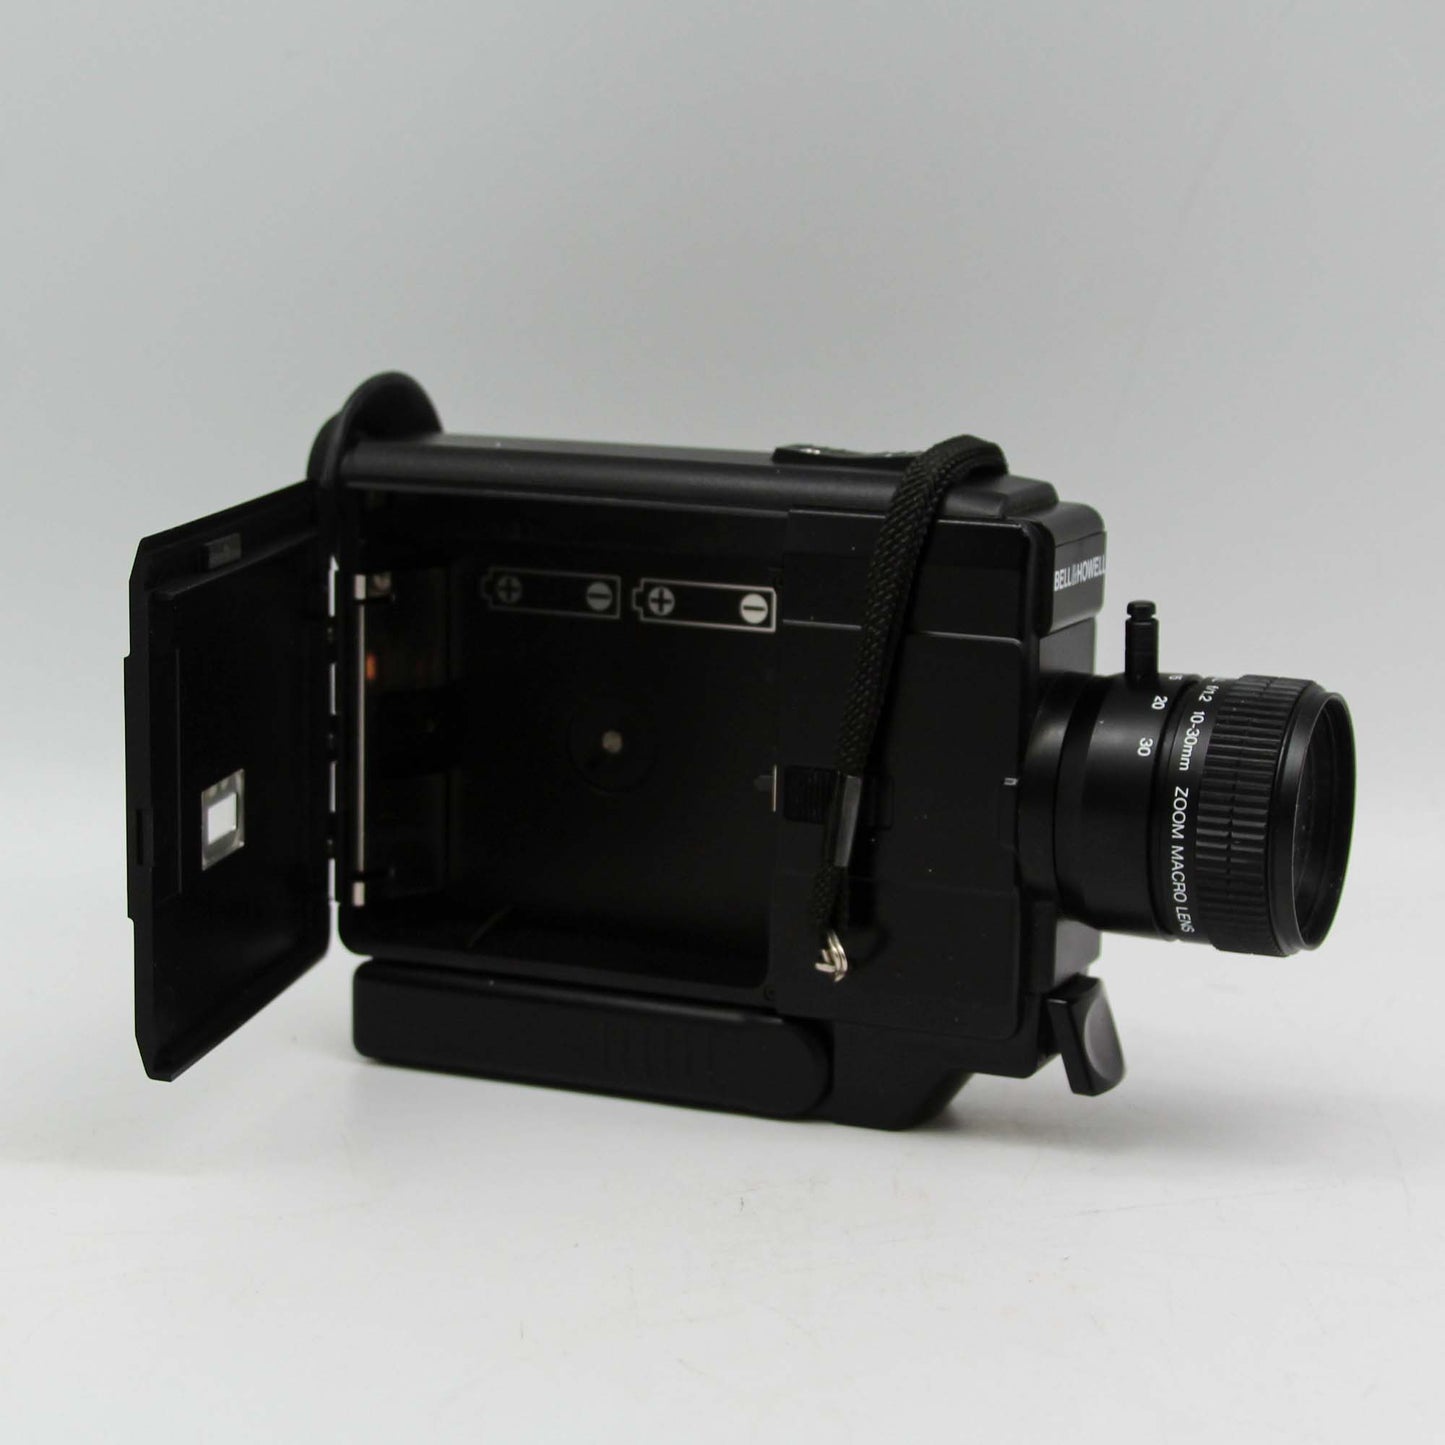 1980s Bell & Howell Camera